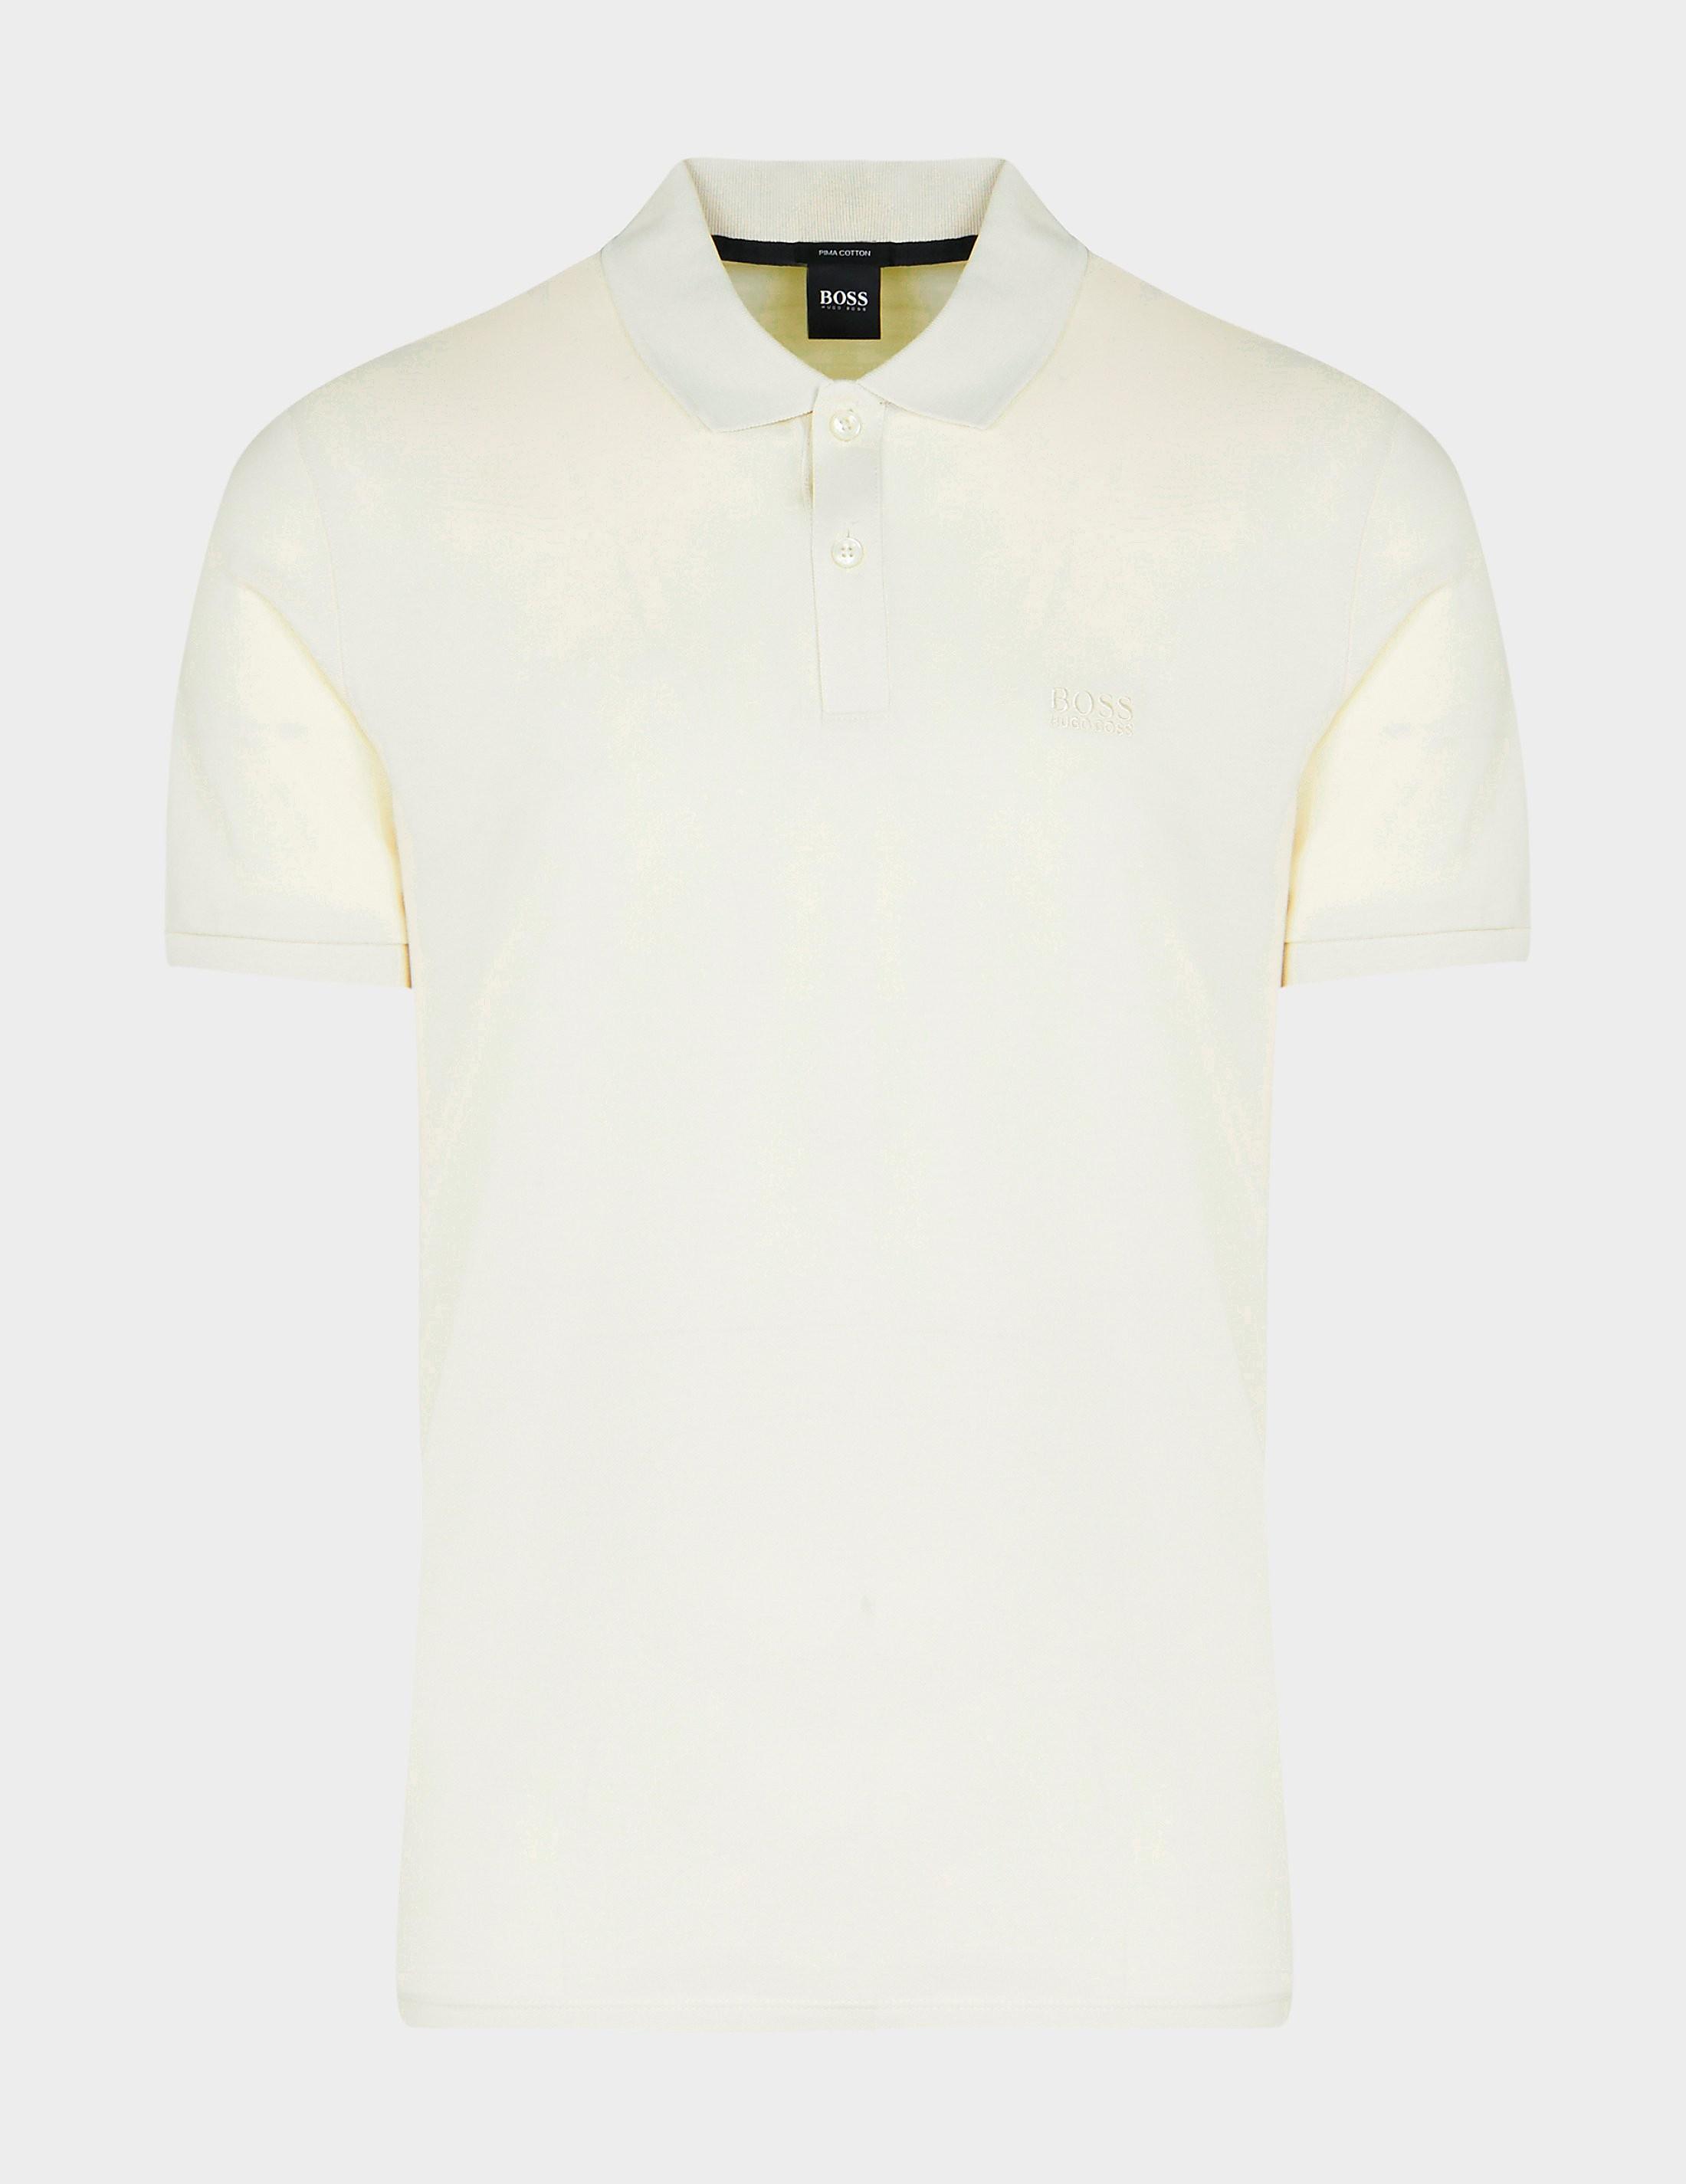 NWT Hugo Boss Cotton Polo Shirt Pallas Regular Fit Size S Black 